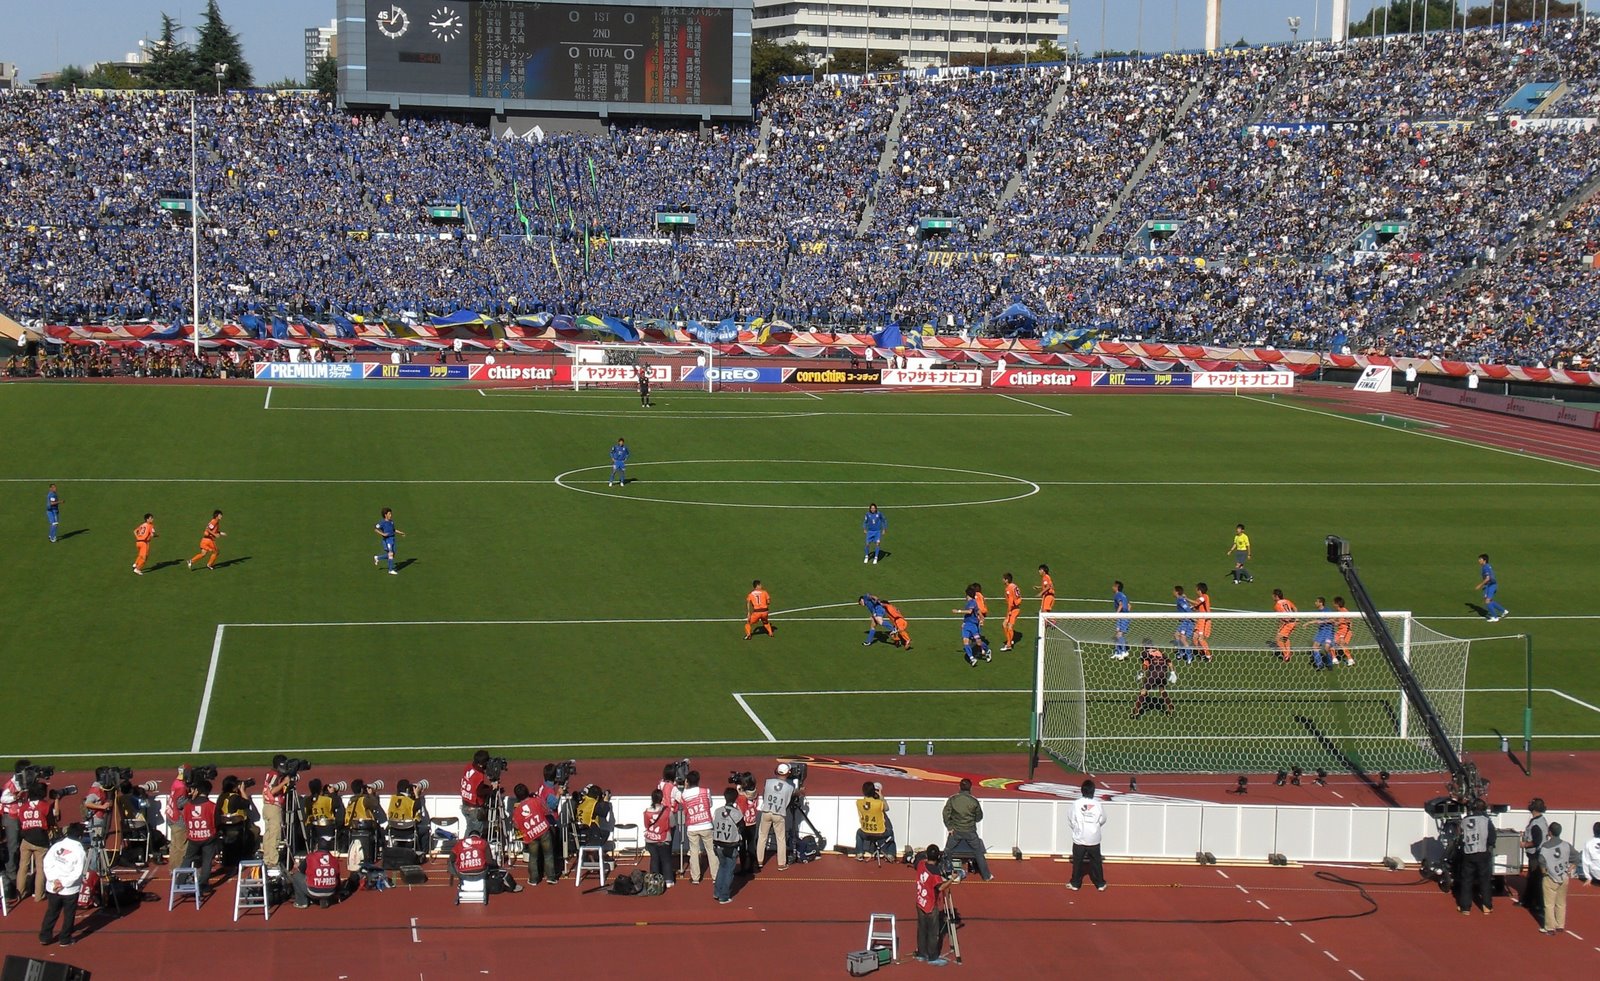 A tense battle in the 2008 League Cup final